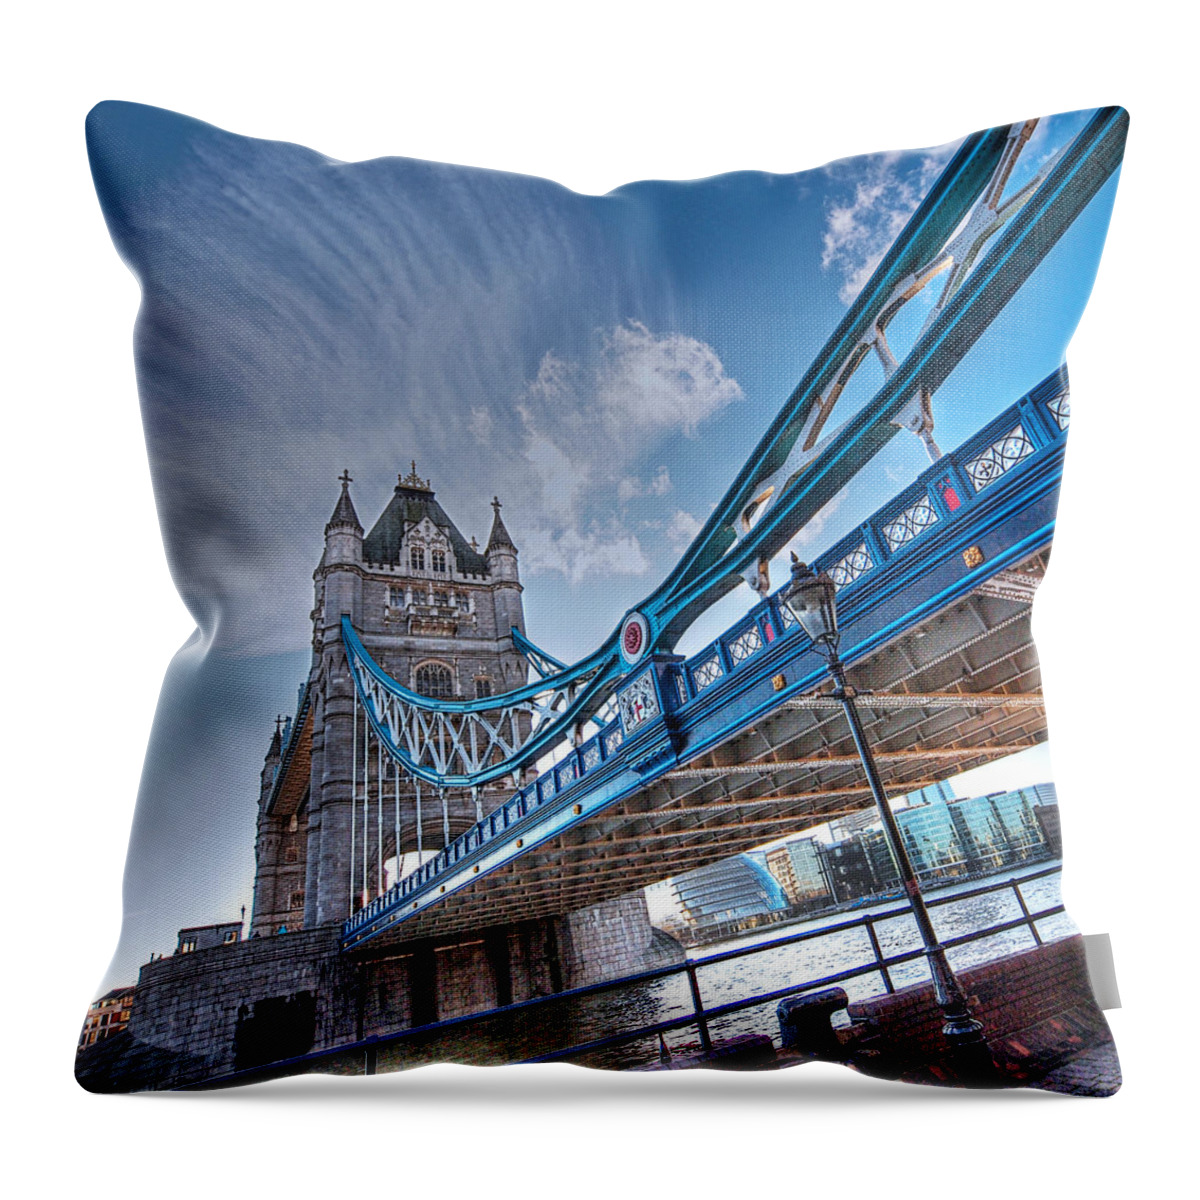 London Throw Pillow featuring the photograph Under Tower Bridge London by Gill Billington